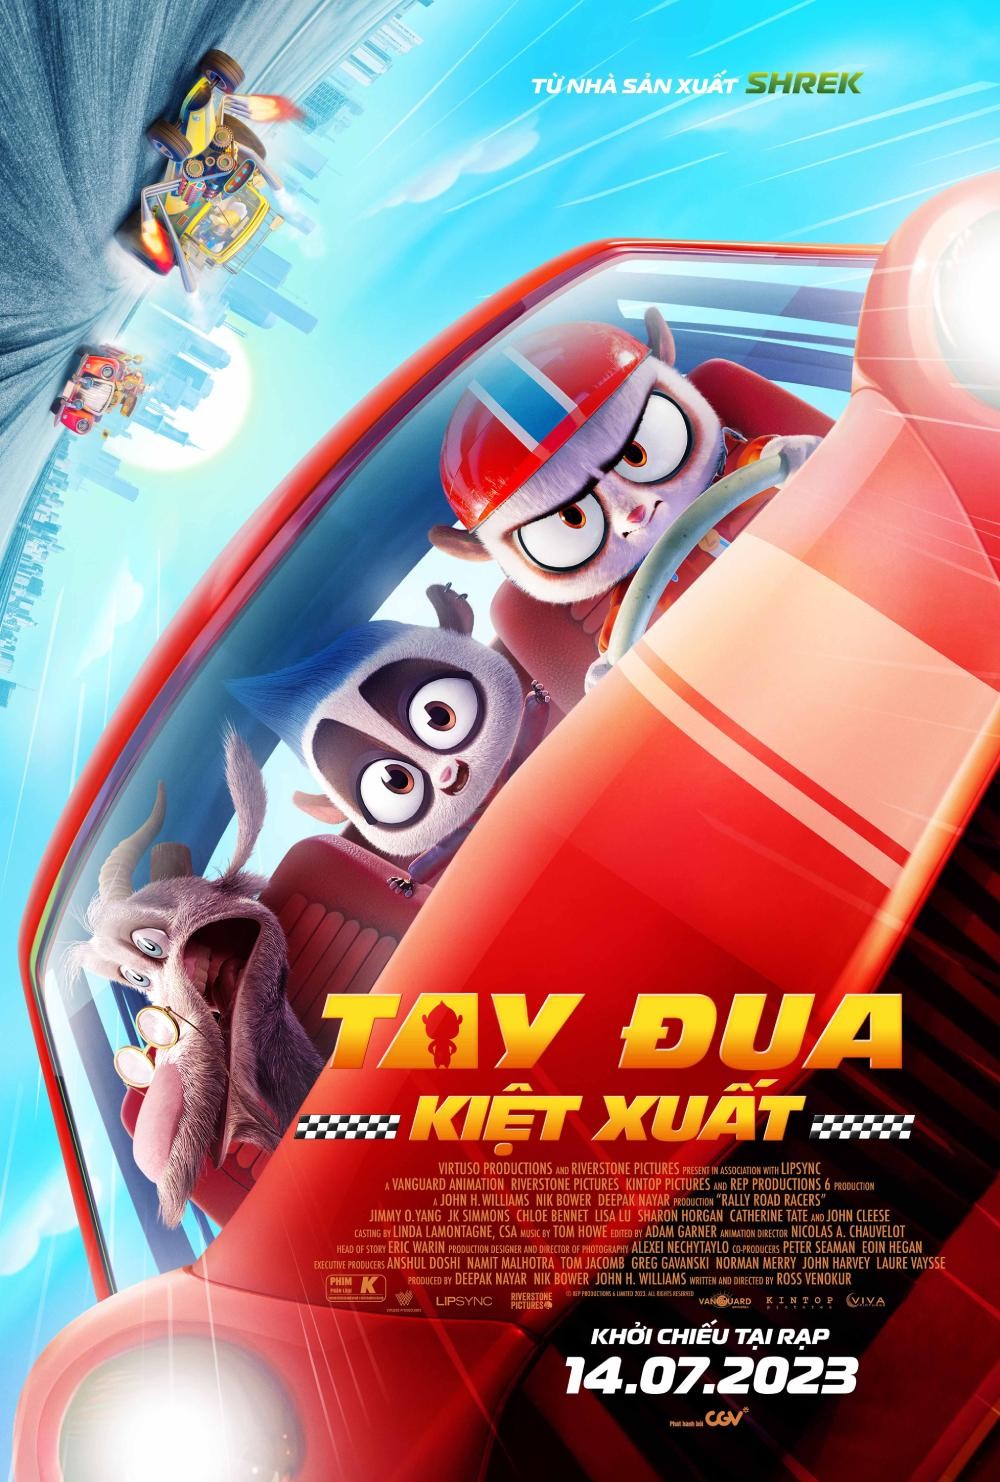 Banner Phim Tay Đua Kiệt Xuất (Rally Road Racers)